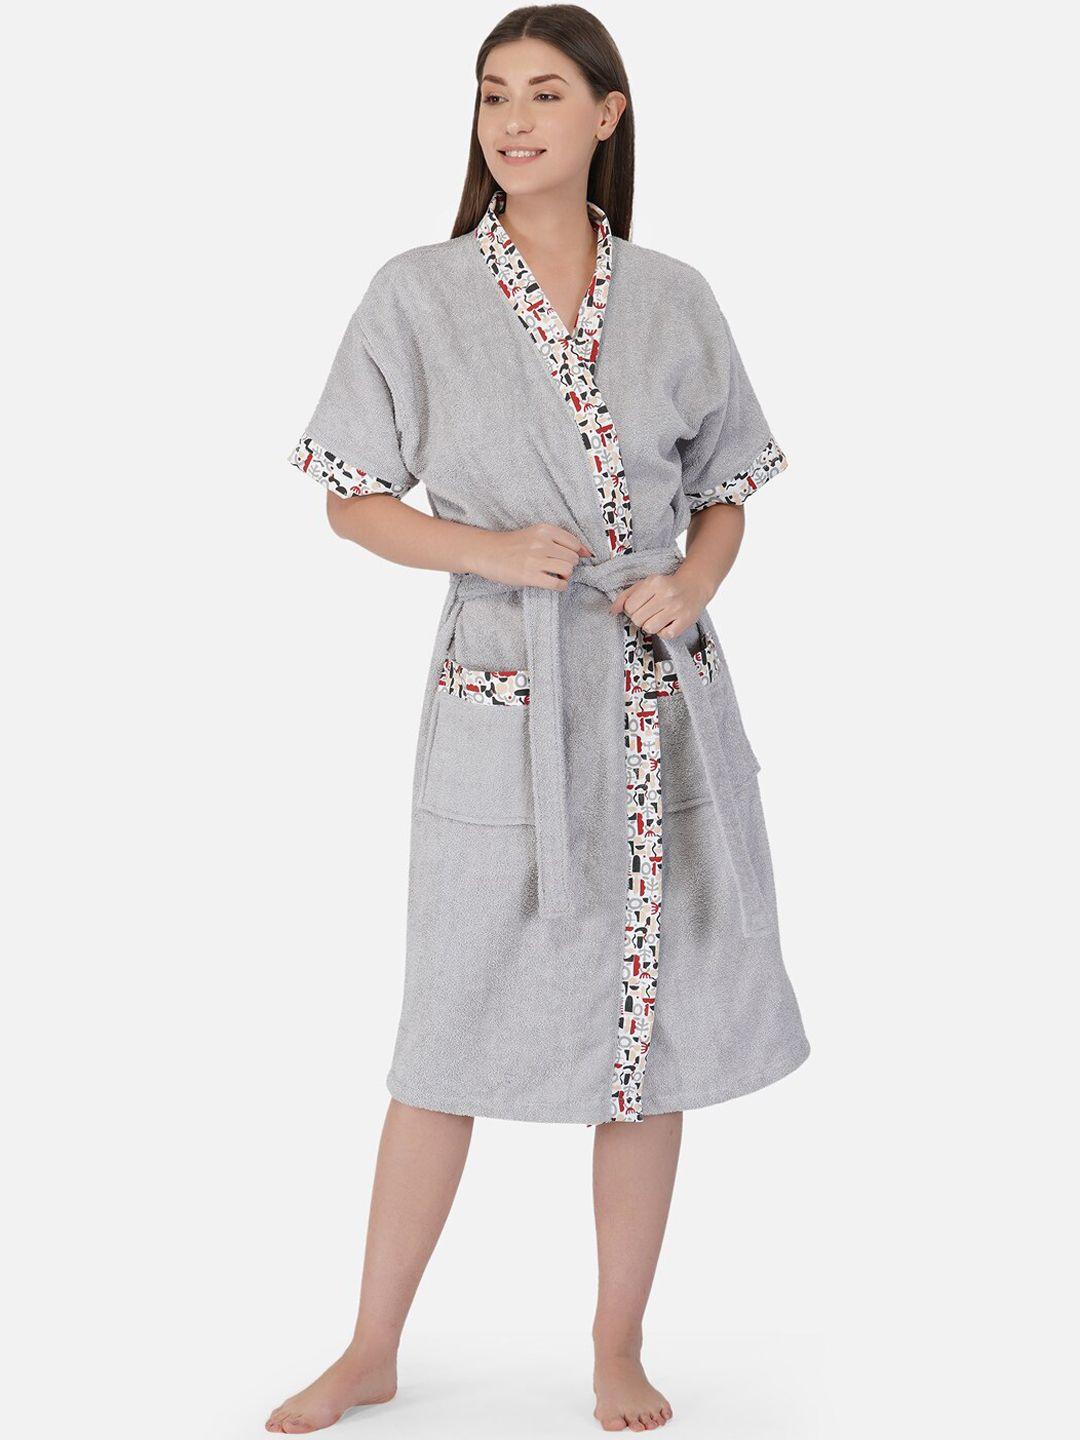 rangoli women grey 420 gsm pure cotton bath robe with slippers